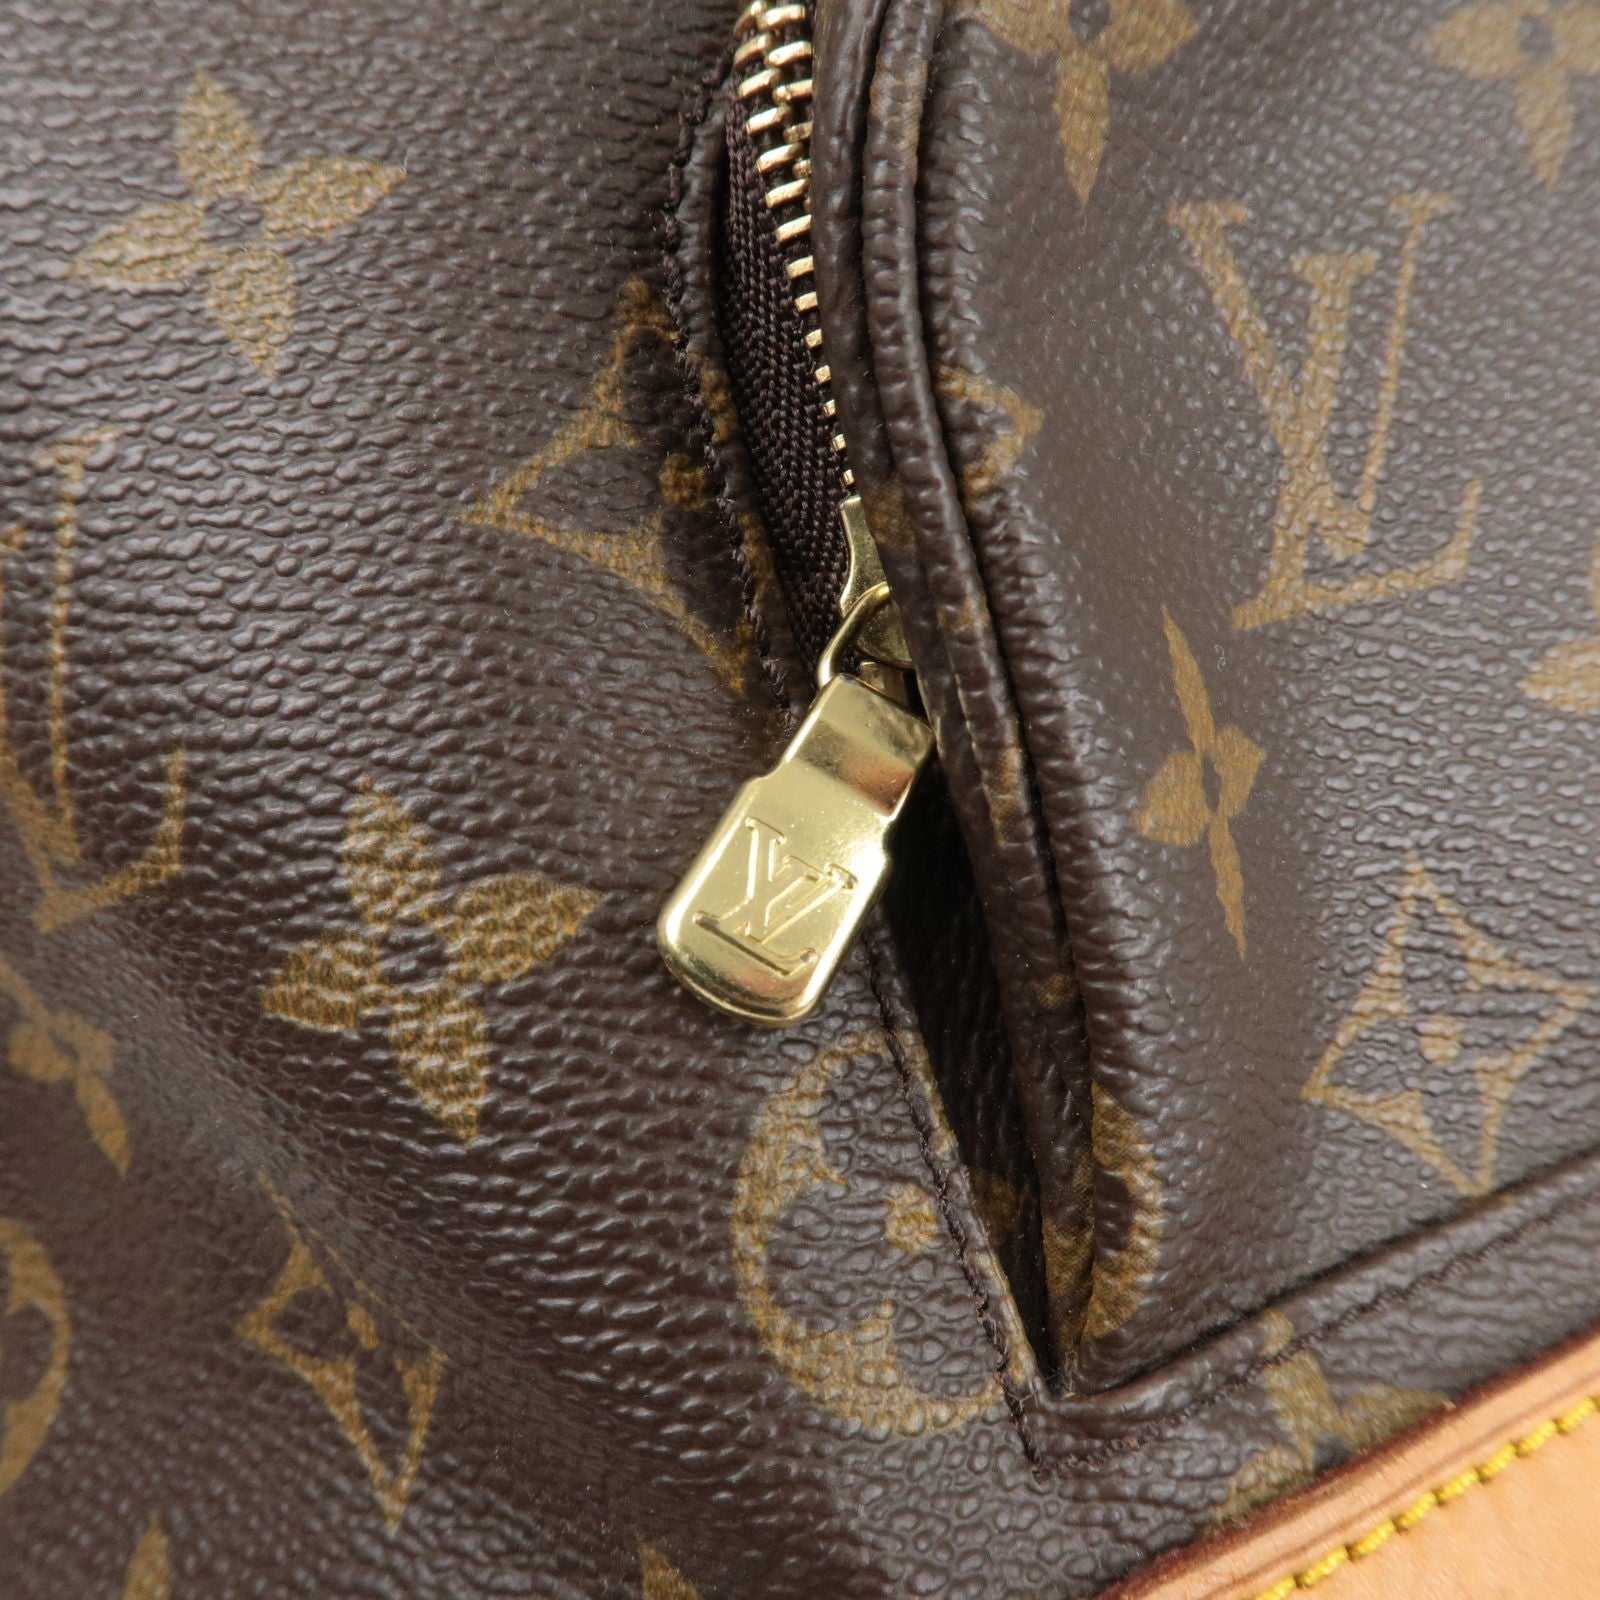 Louis Vuitton Alma Voyage MM Monogram Bag